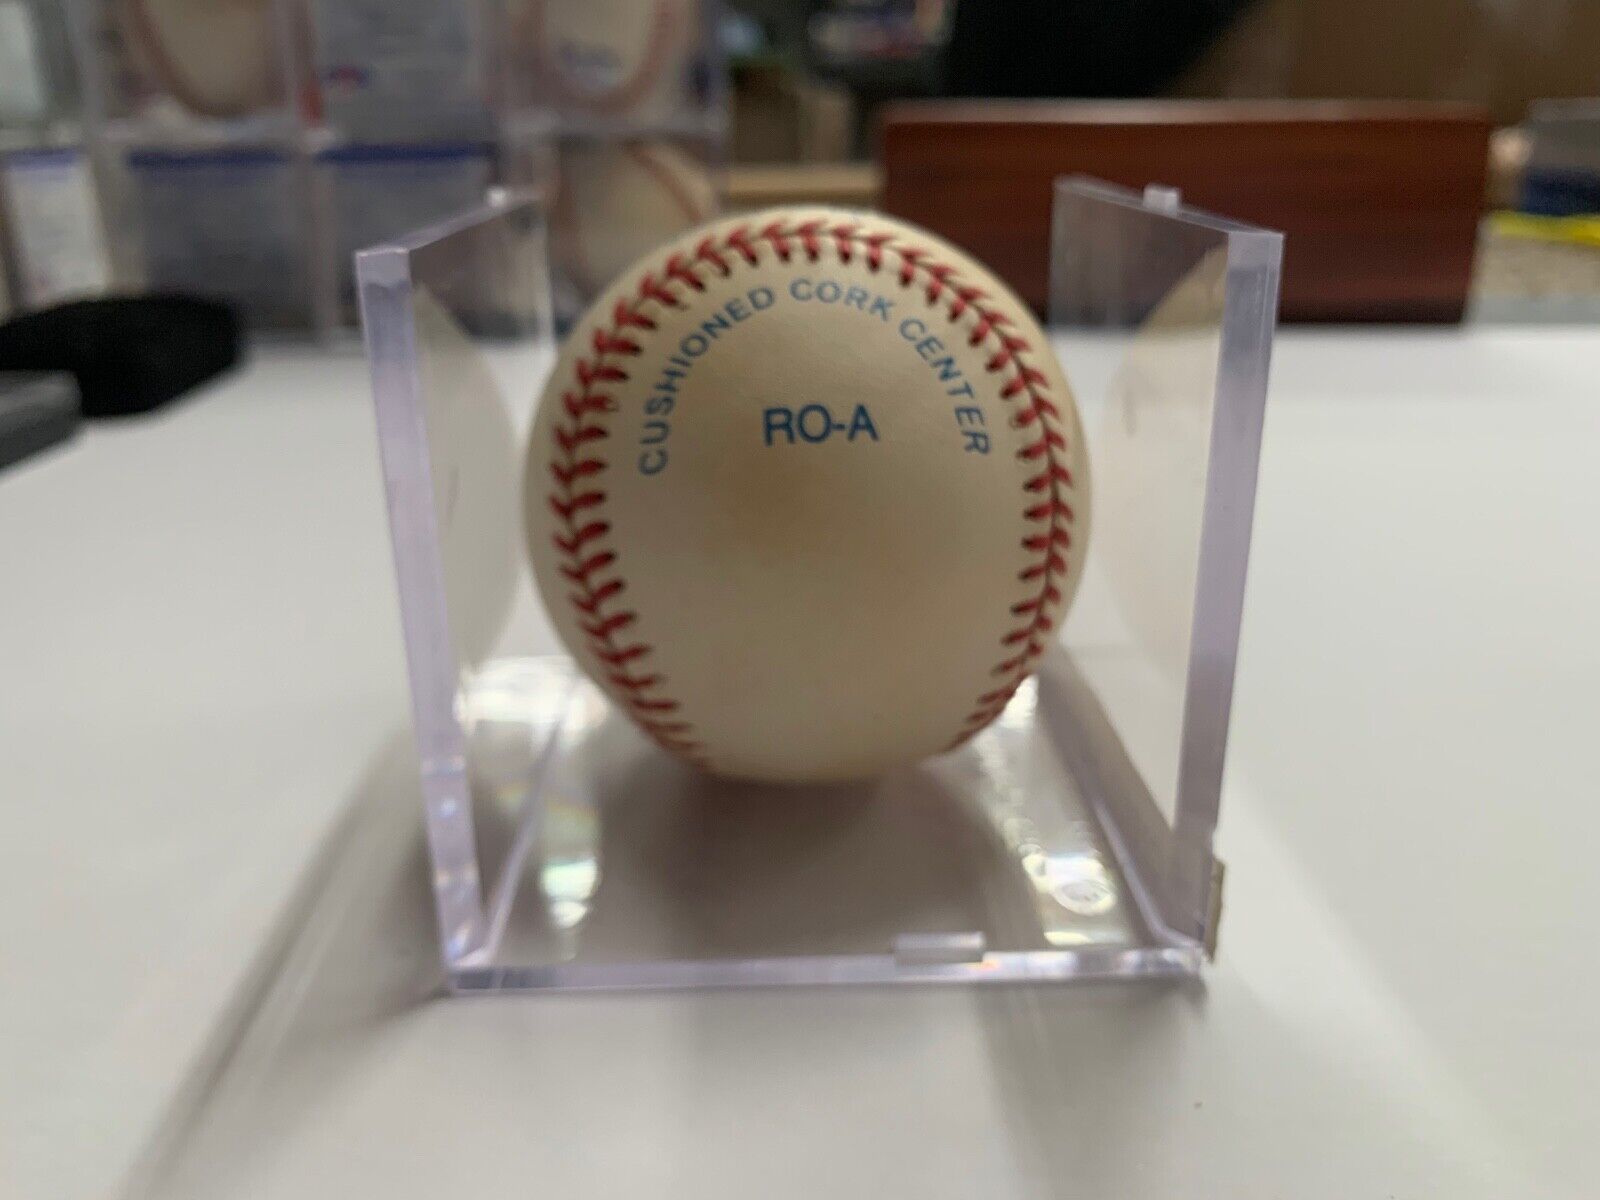 Johnny Vander Meer Autographed Rawlings Baseball PSA Certified AI63868 MLB